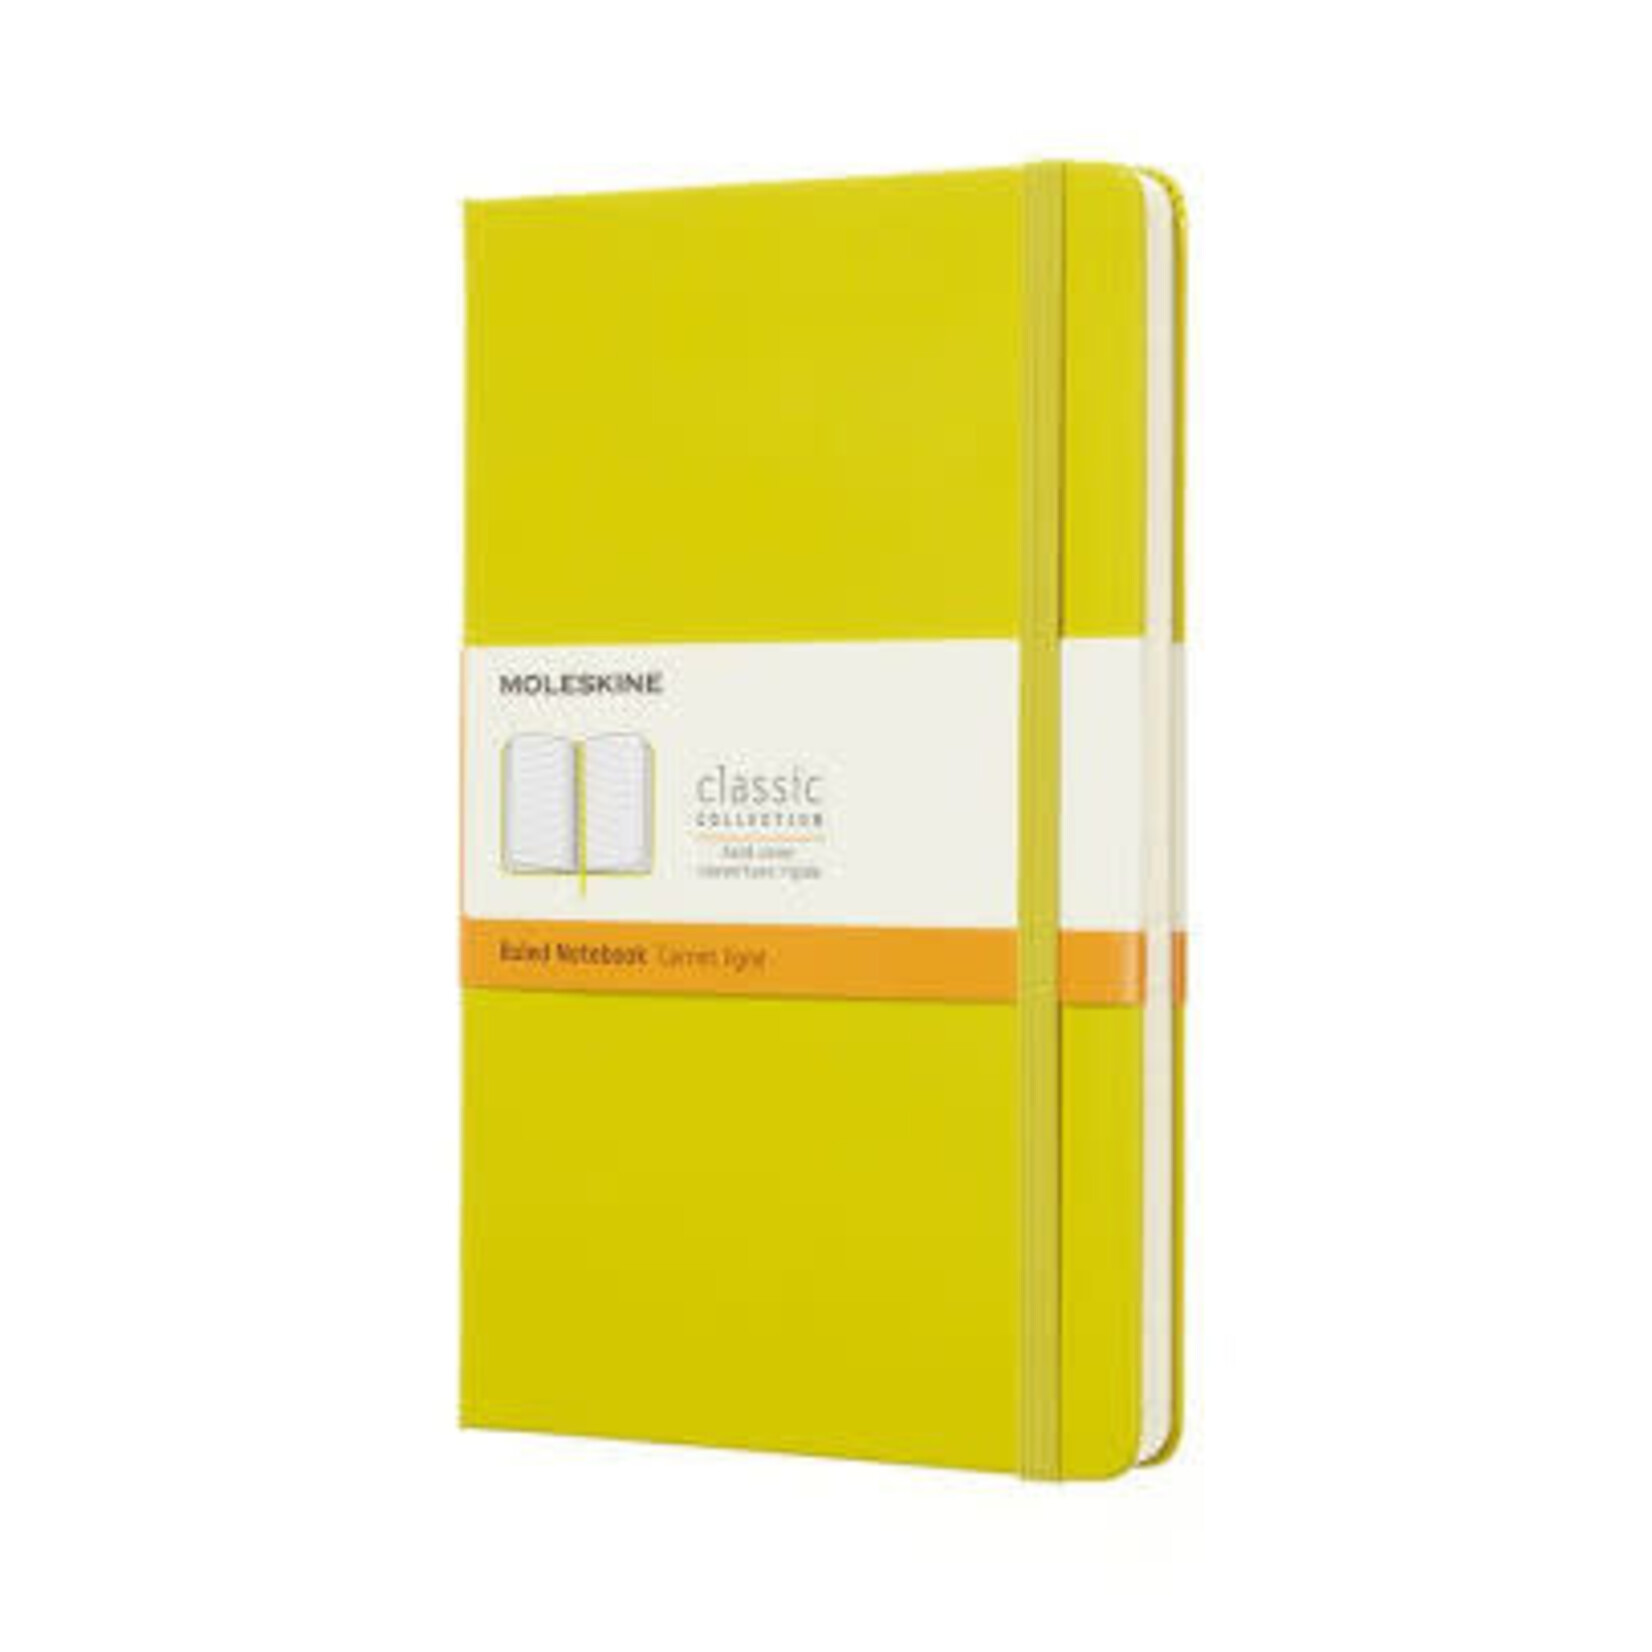 Moleskine Moleskine Classic Notebook, Large, Ruled, Yellow Dandelion, Hard Cover (5 X 8.25)